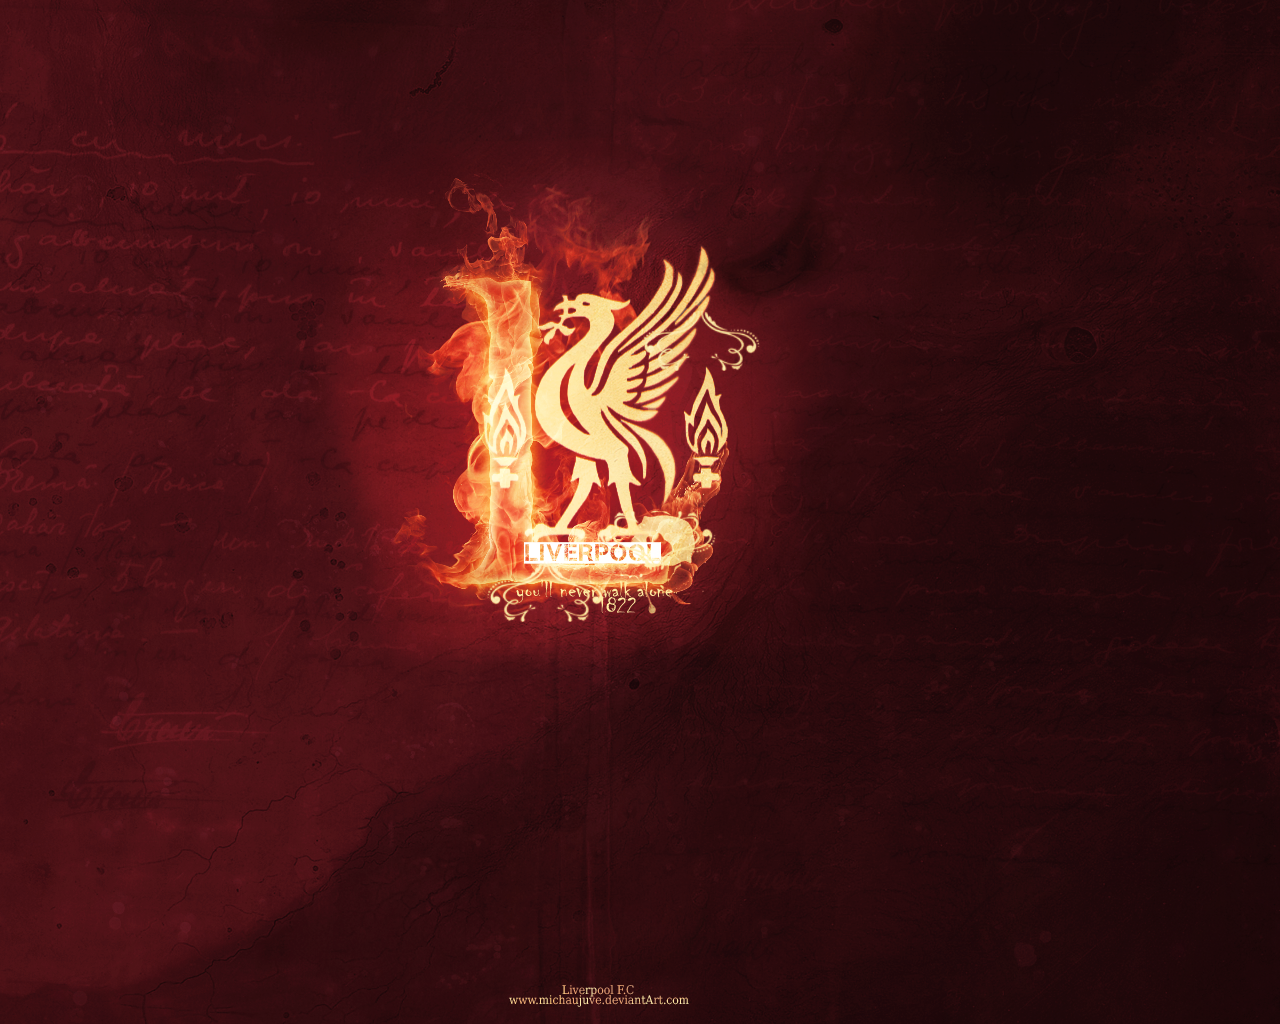 Liverpool FC Logo Wallpaper Download this wallpaper